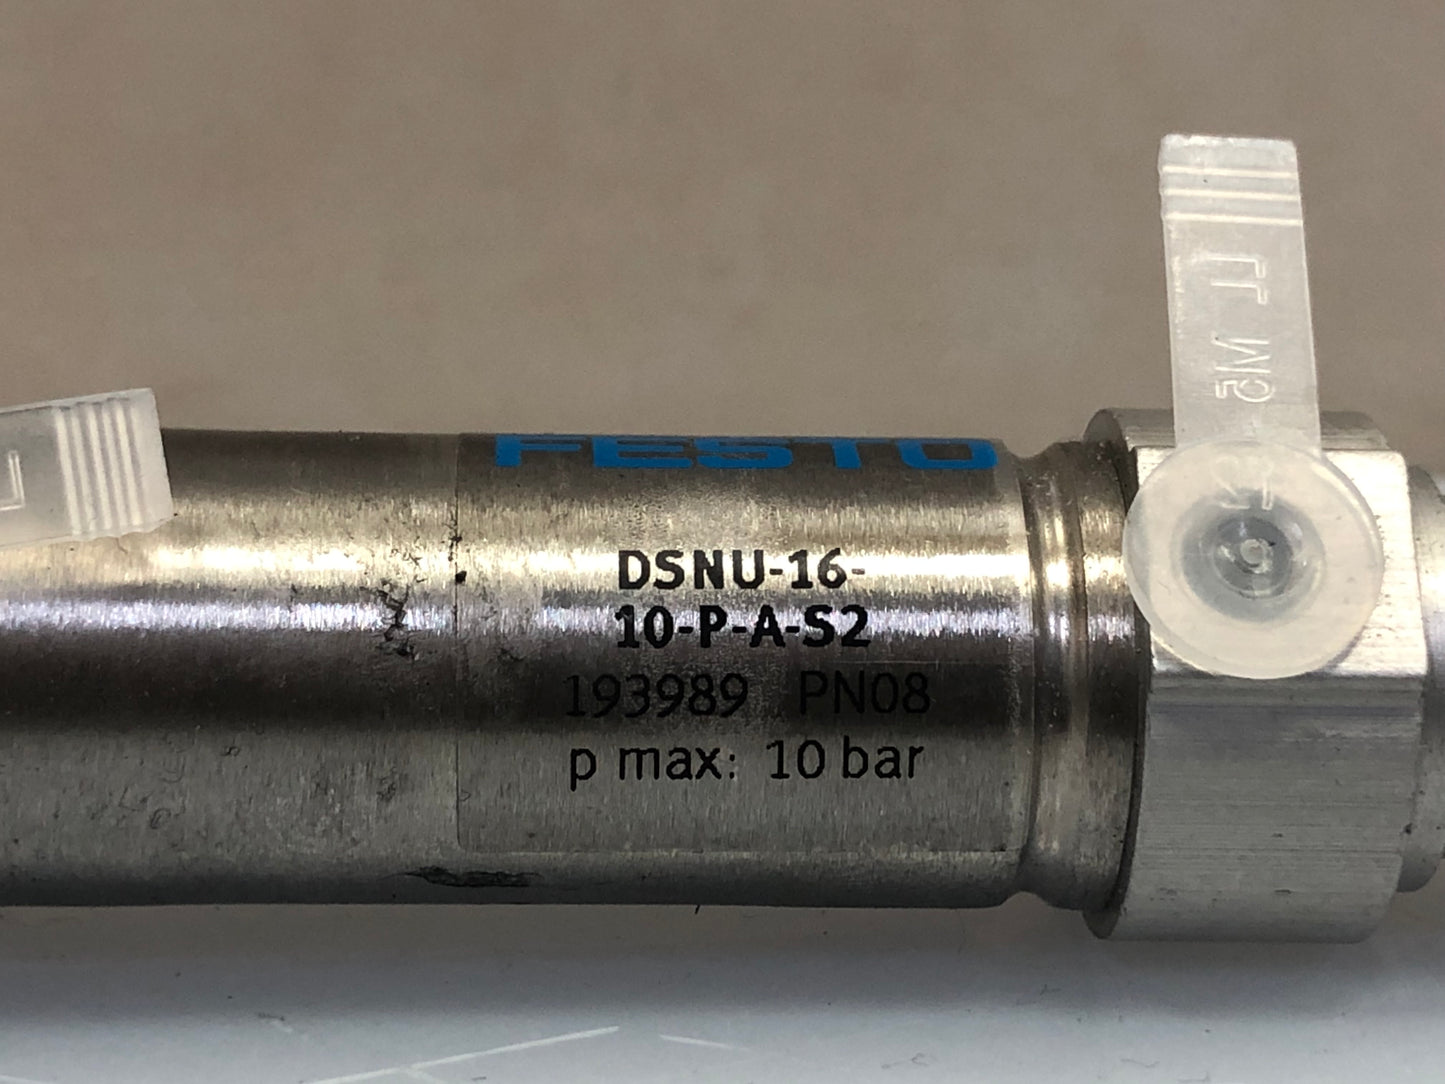 Festo DSNU-16-10-P-A-S2 Cylinder 193989